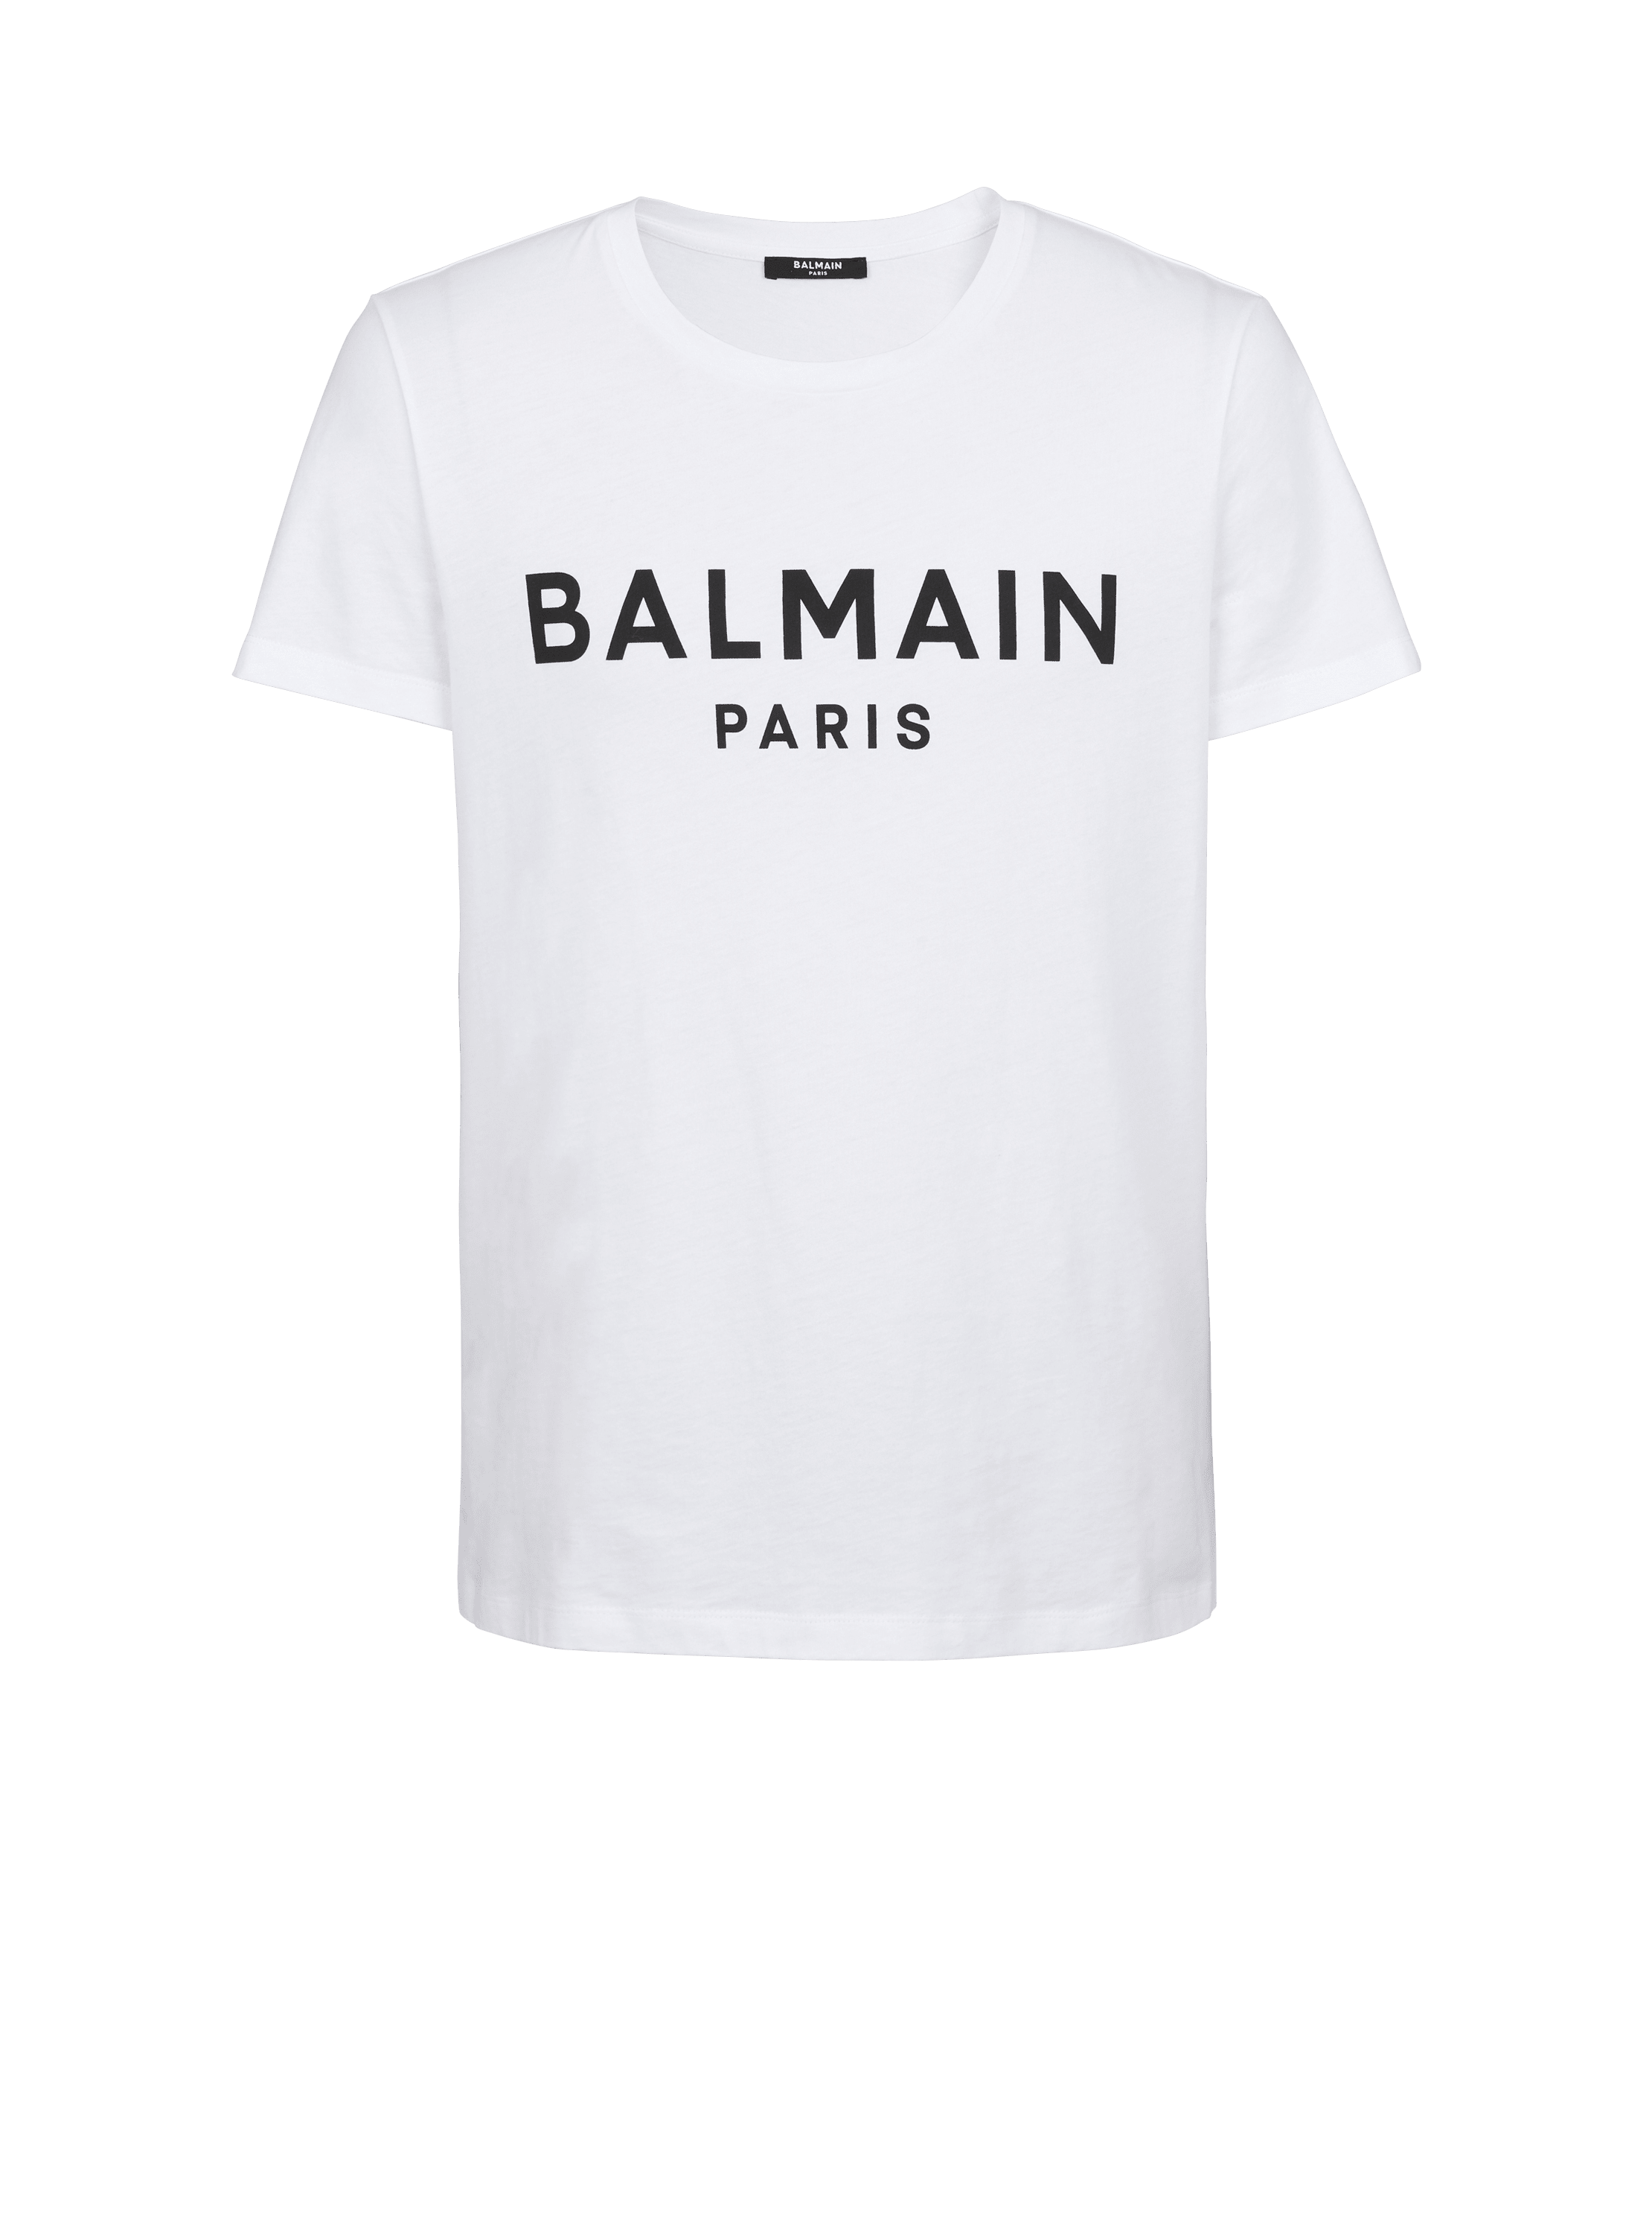 Balmain Paris T-shirt, WeiB, hi-res